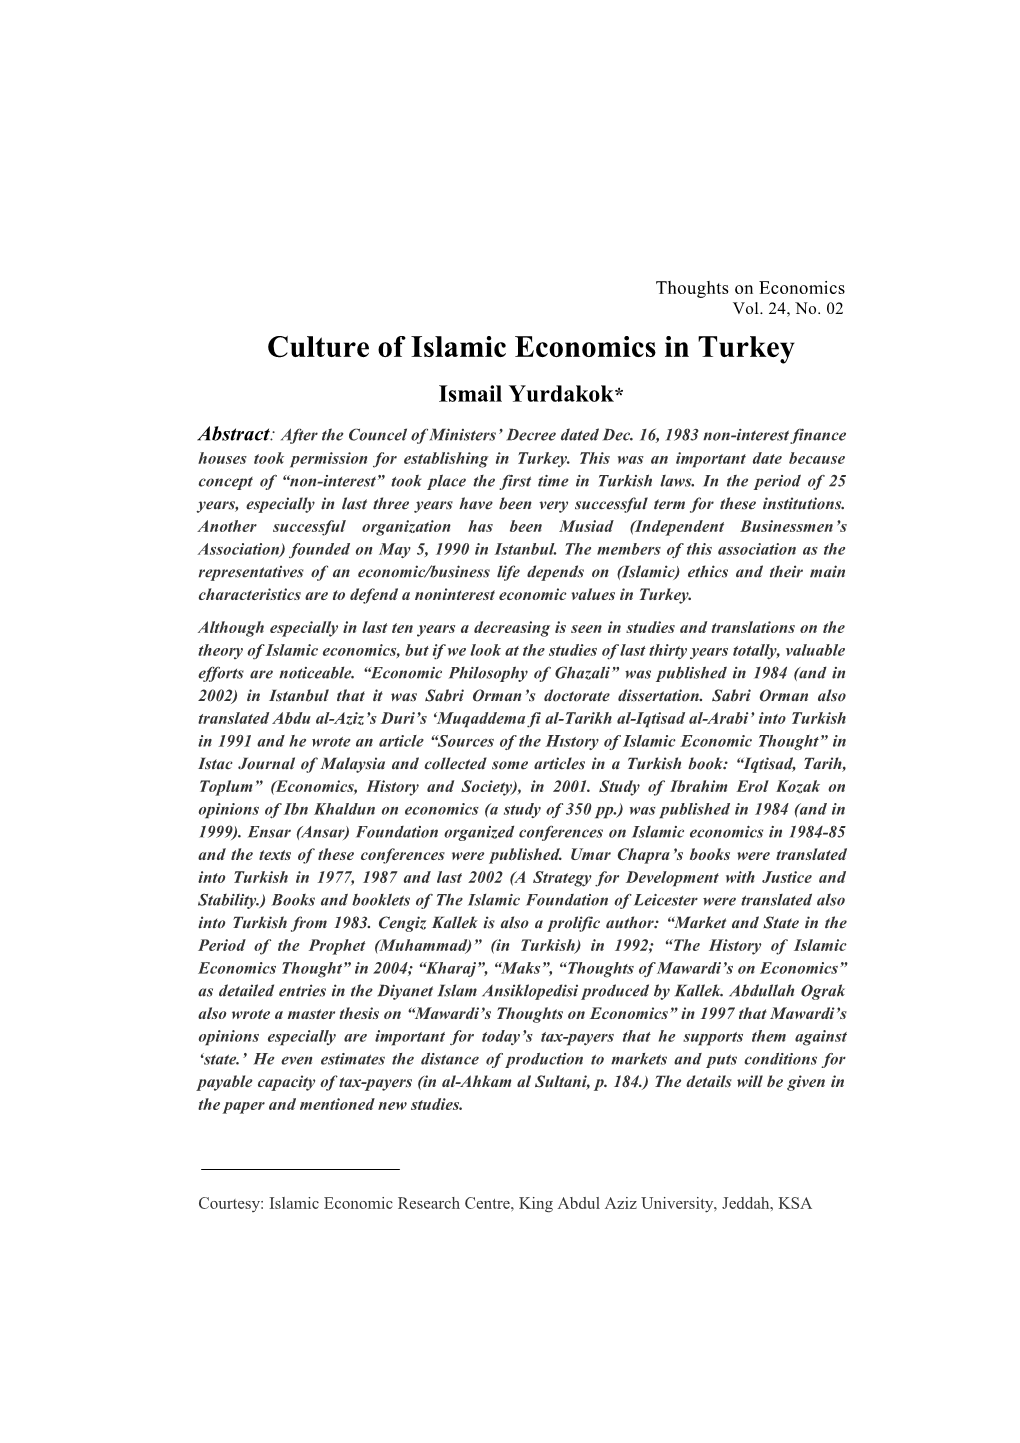 Culture of Islamic Economics in Turkey